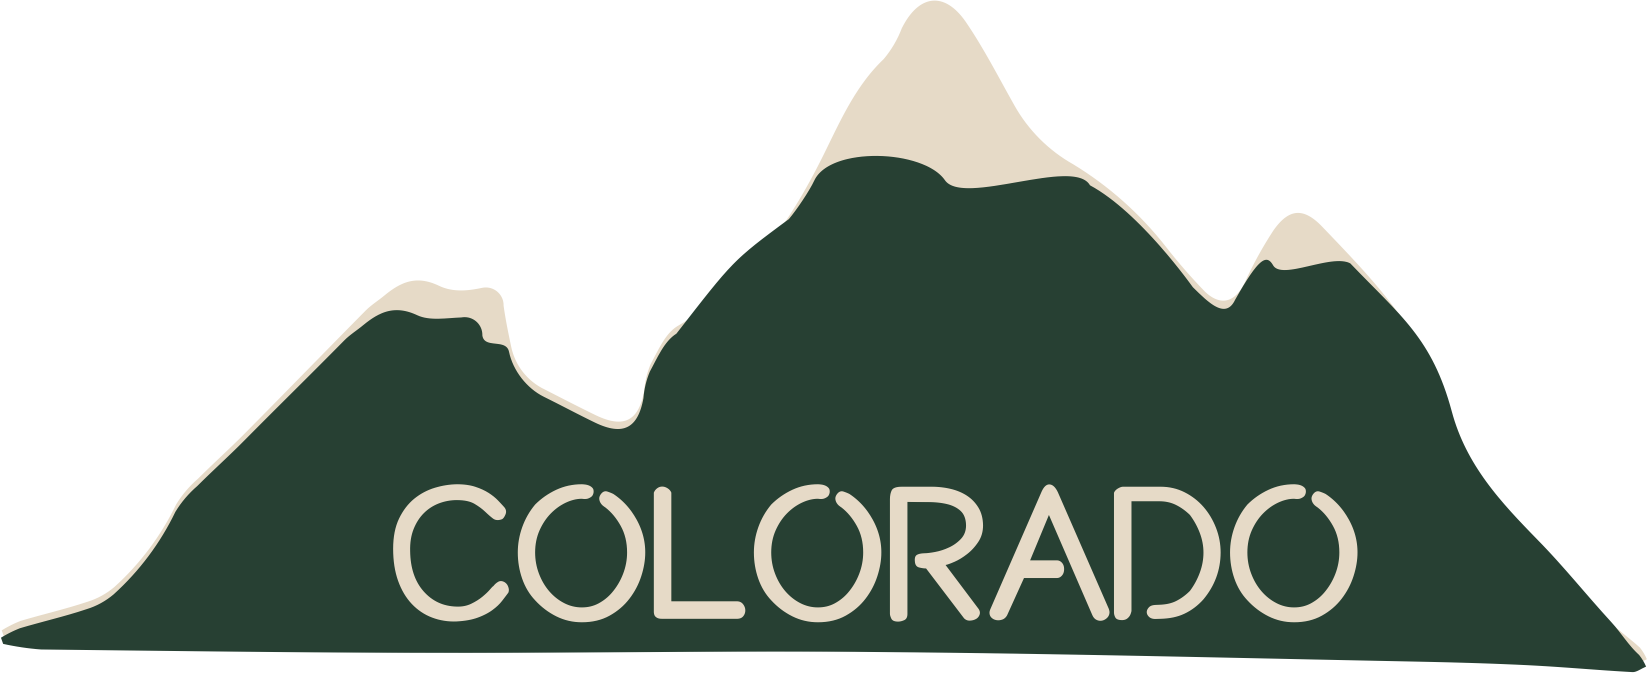 Colorado Collection Colorado Mountains 5.5 x 2.25 Laser Cut by SSC Laser Designs